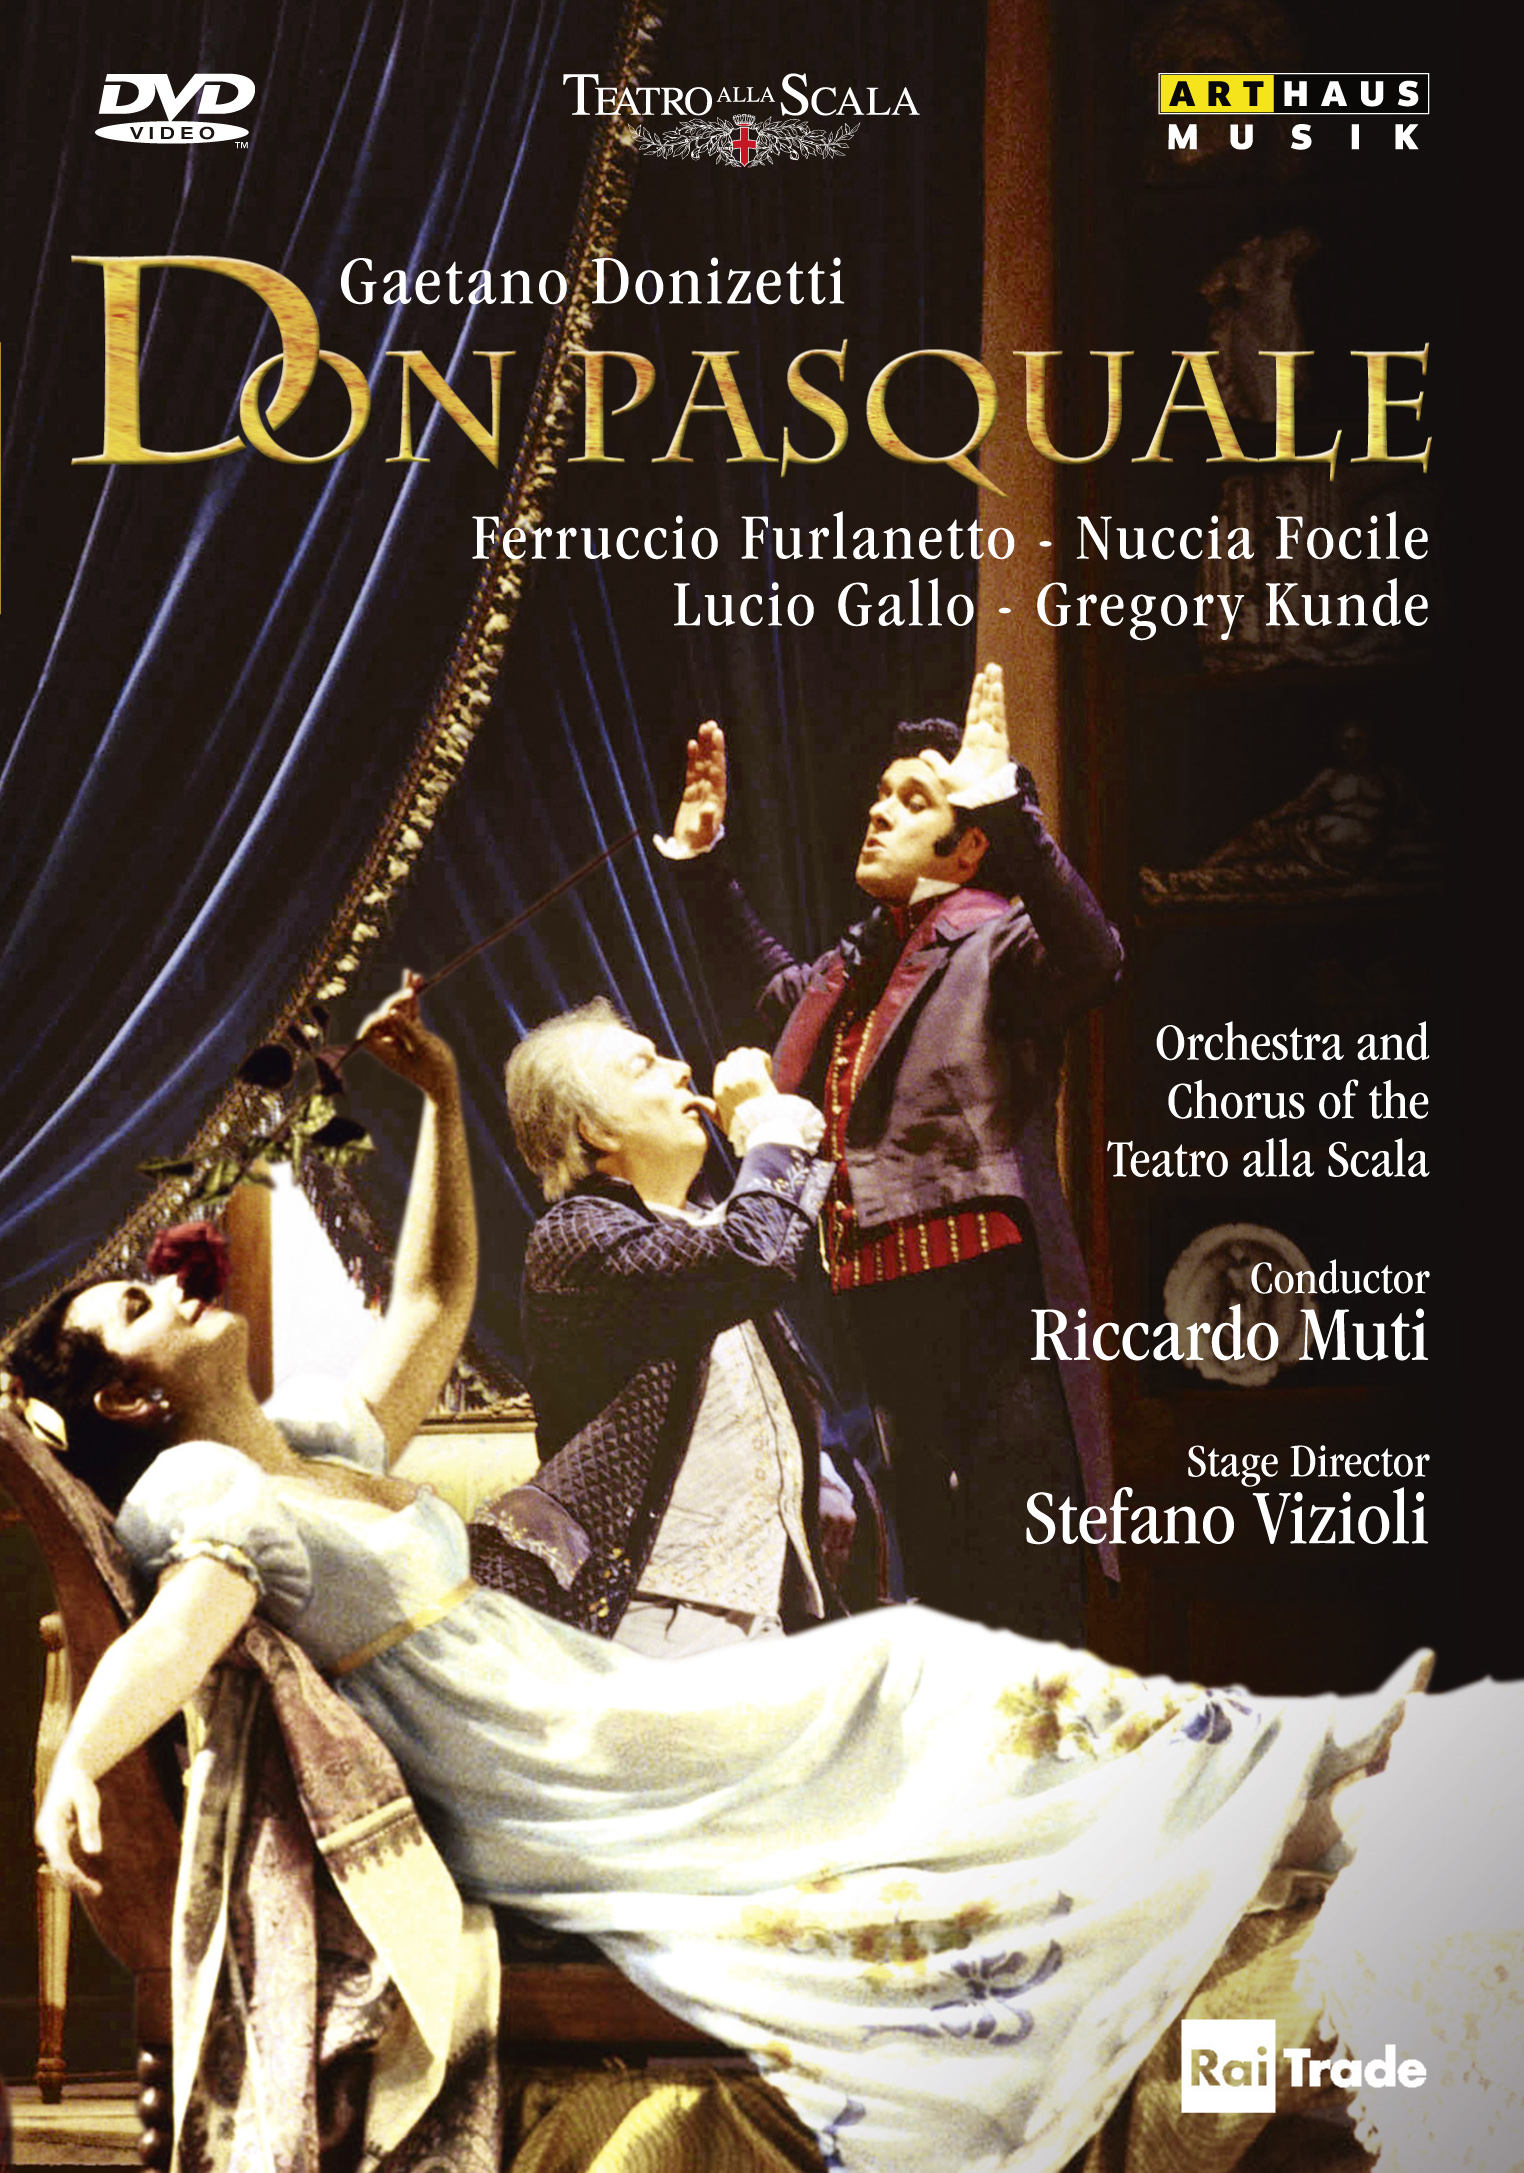 Gaetano Donizetti : Don Pasquale - DVD A-Z DVD - Arthaus Musik